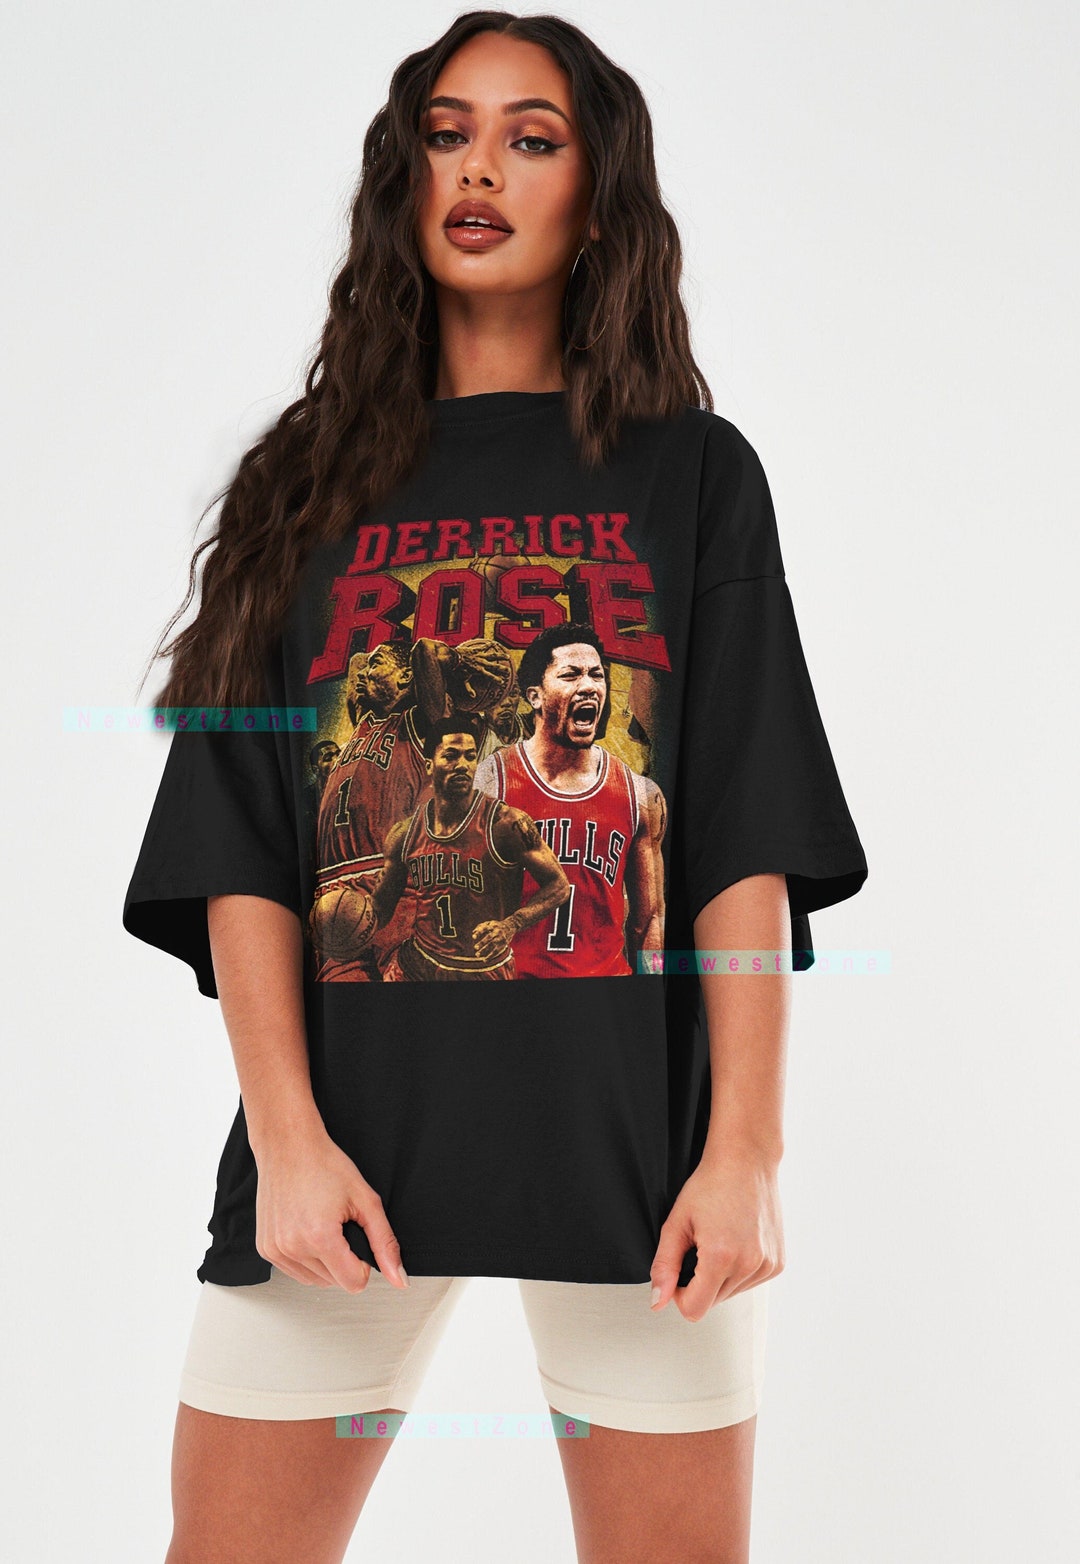 Derrick Rose 50 Point Game | Essential T-Shirt